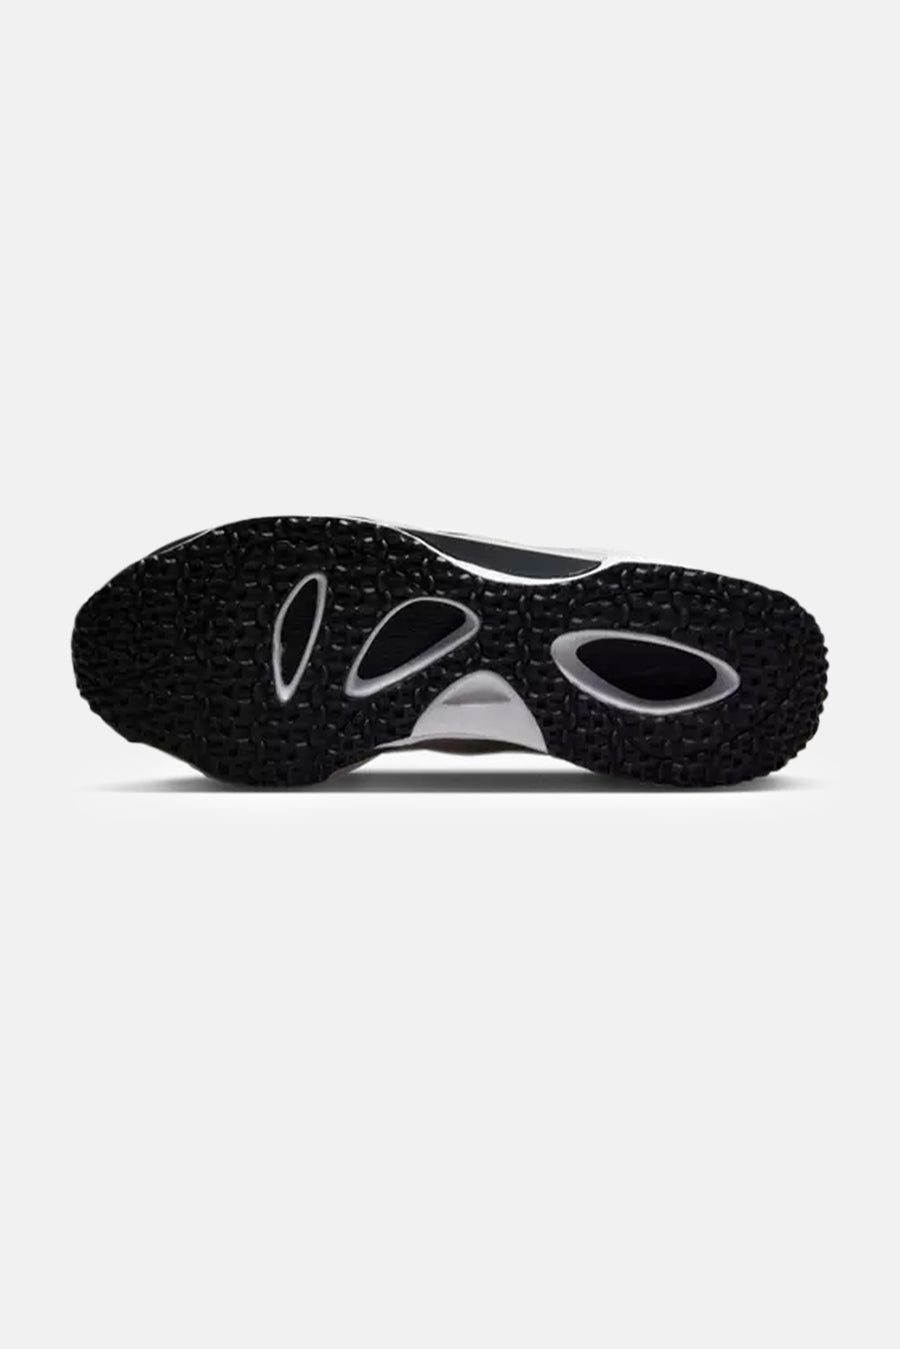 Nike Spark Phantom/Smoke Grey/Sanddrift Women's Shoes, Size: 11.5